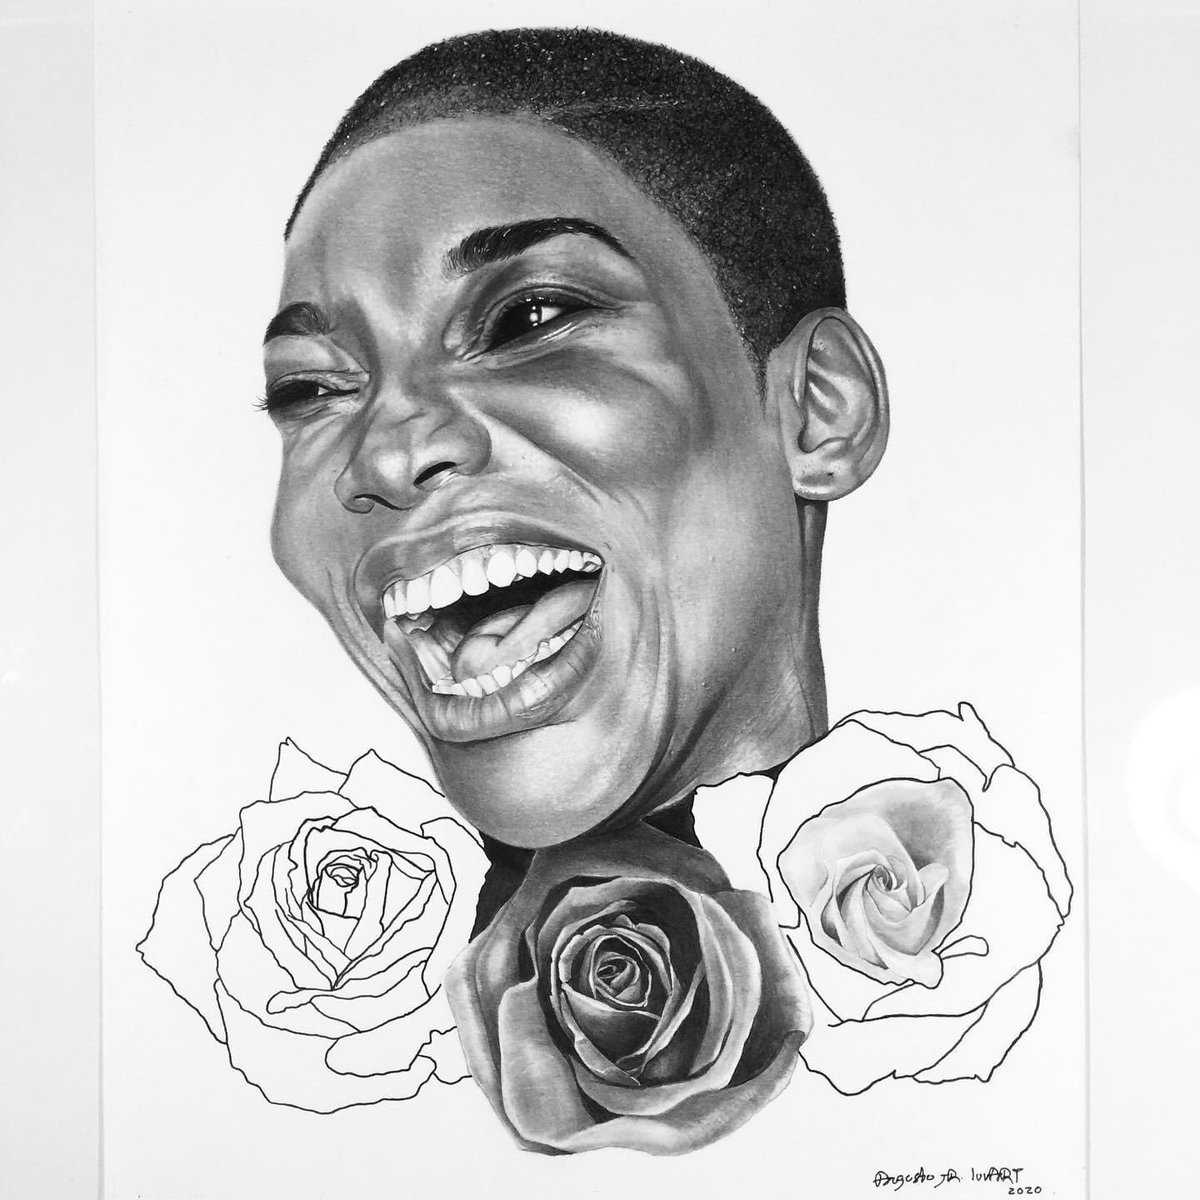 “The Fourth Rose”
#artistsoninstagram #artist #youngartist #artoftheday #art_4share #artrealistic #hyperrealistic #drawing #graphitedrawing #inkart #artinstadaily #dopeart #dopeblackart #mozambique